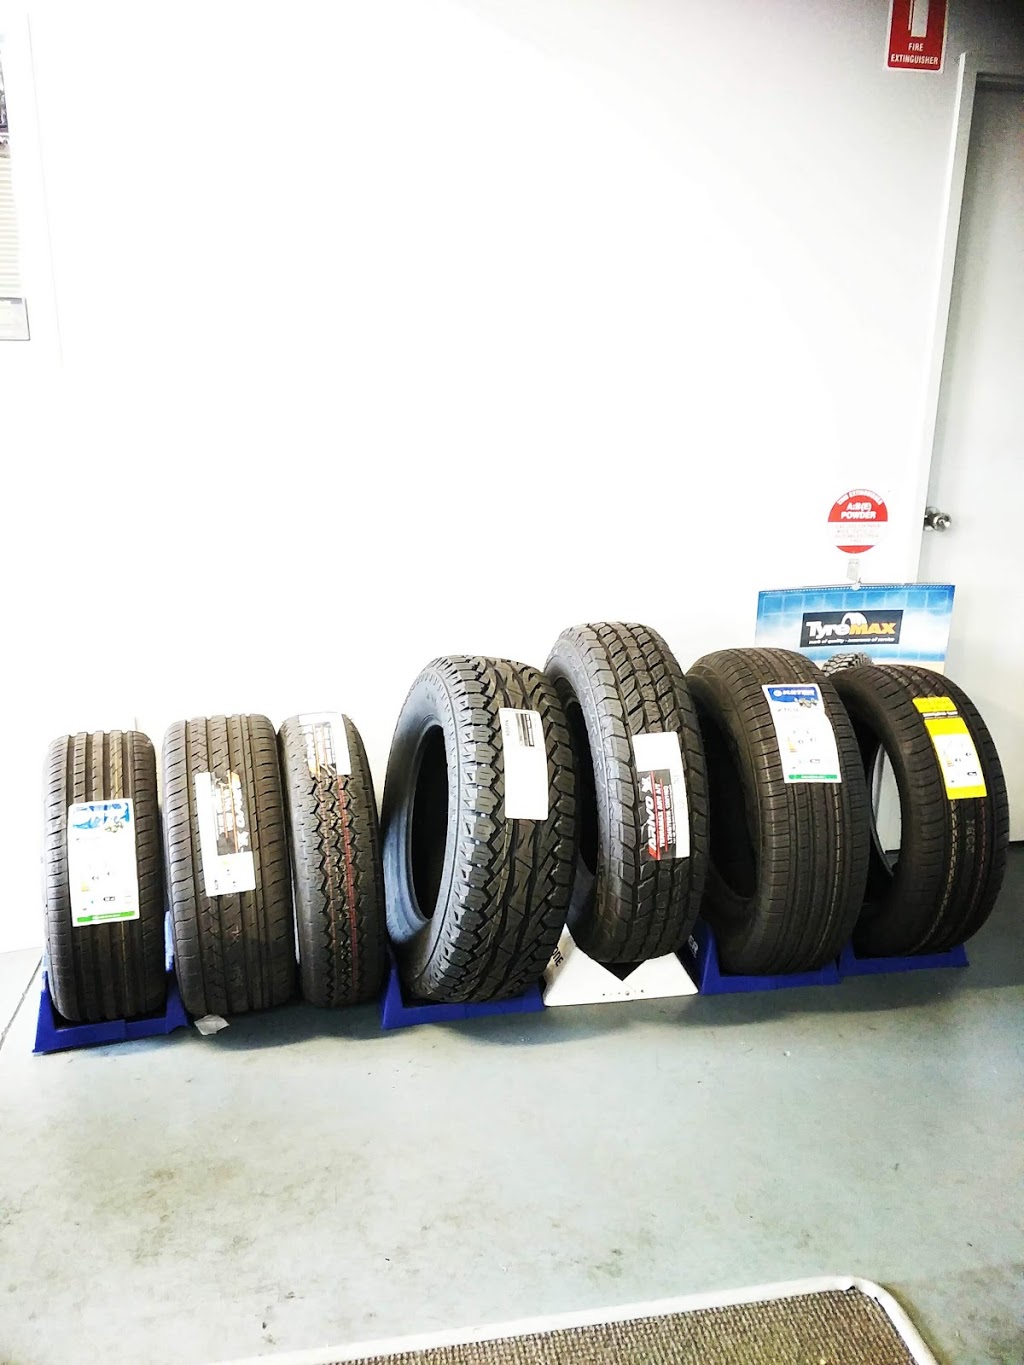 Tharys Gold Tyres - Belmont | car repair | 247 Great Eastern Hwy, Belmont WA 6104, Australia | 0861617997 OR +61 8 6161 7997